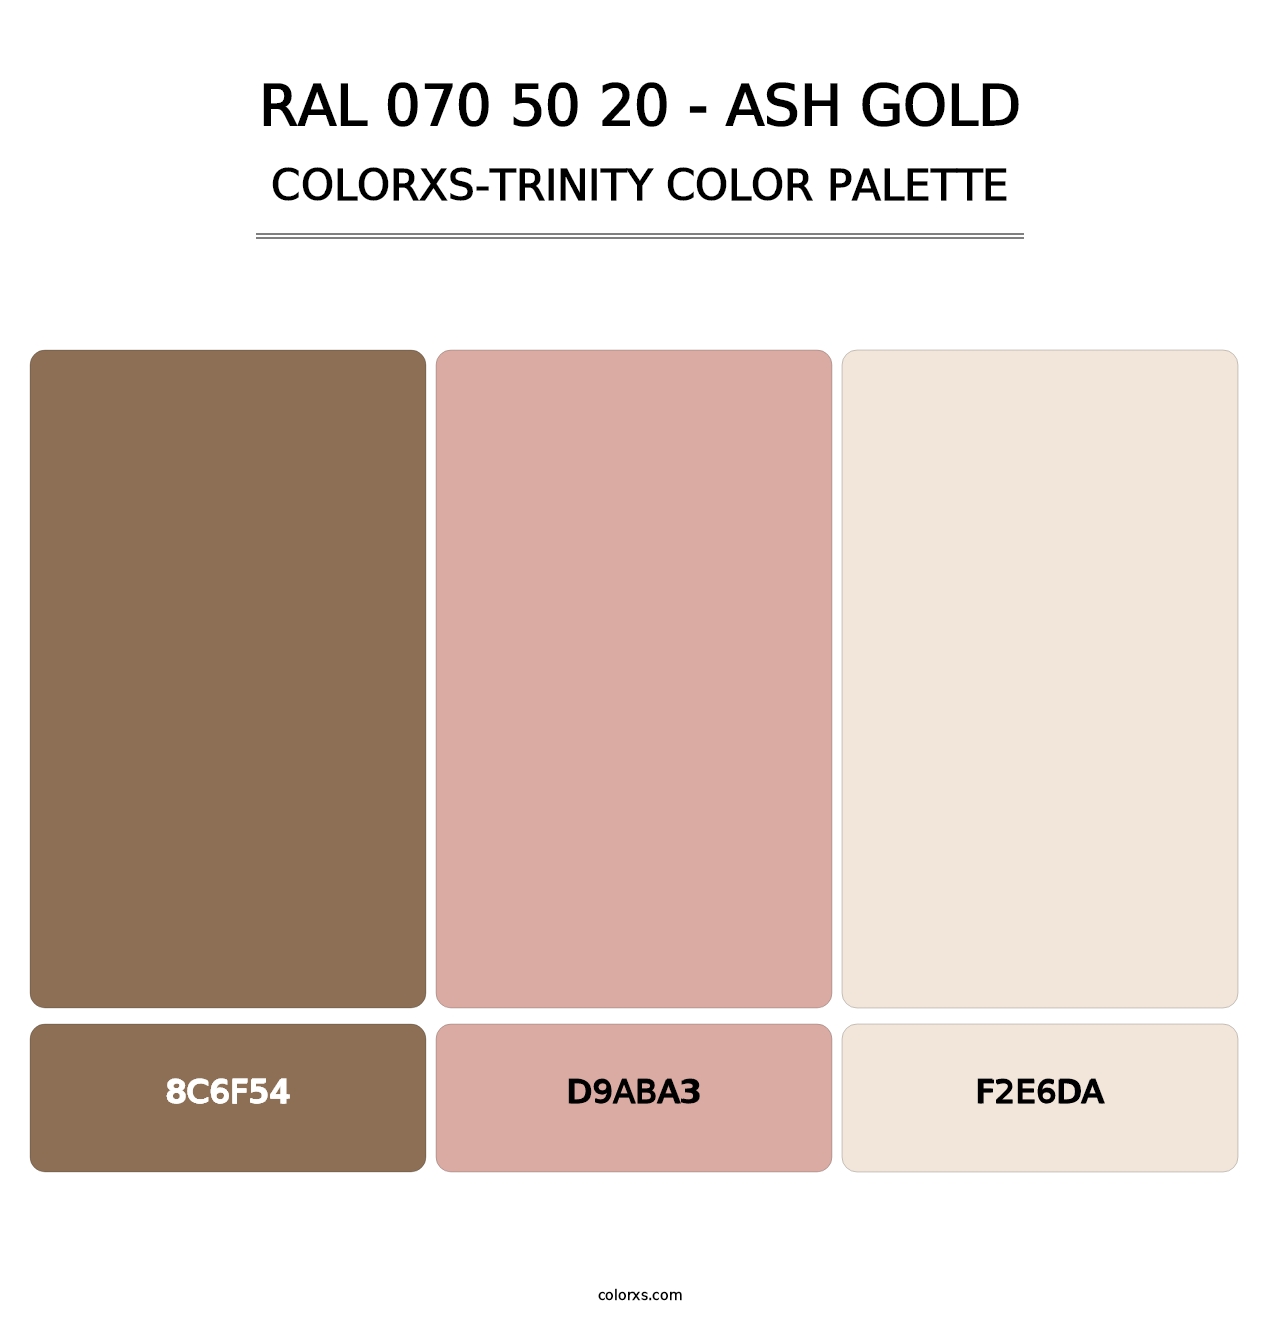 RAL 070 50 20 - Ash Gold - Colorxs Trinity Palette